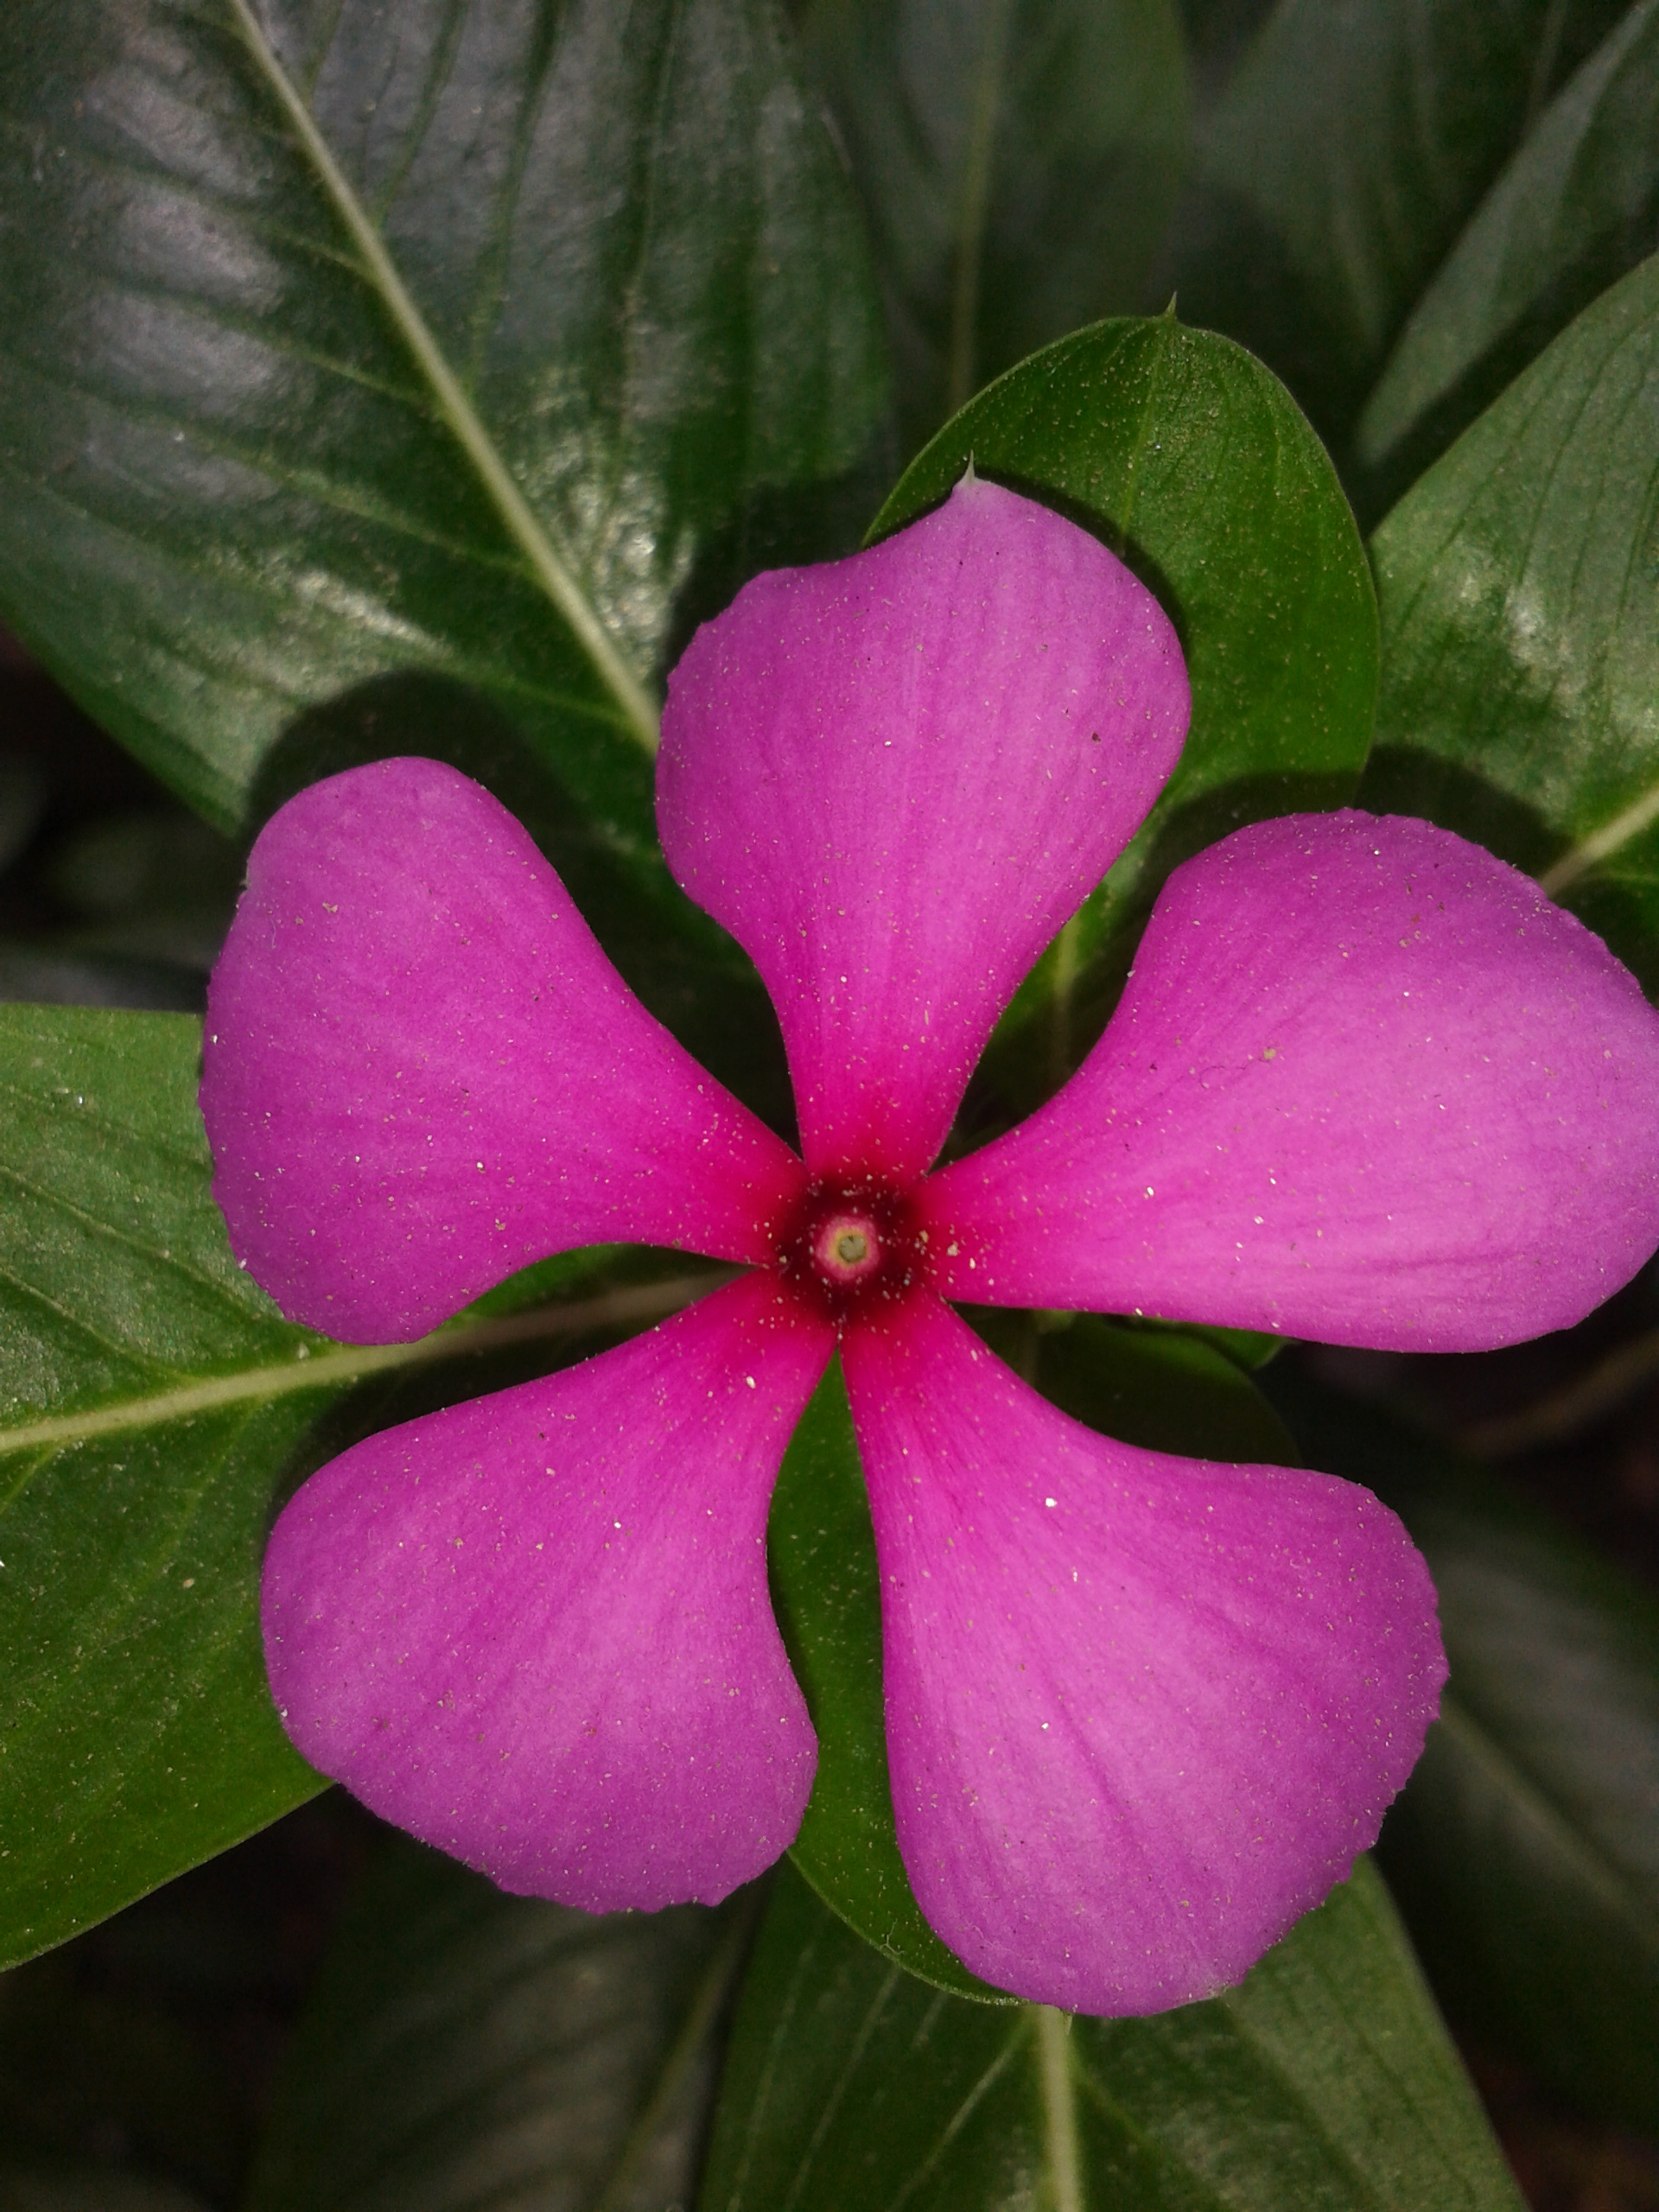 File:Rosy Periwinkle flower.jpg - Wikimedia Commons